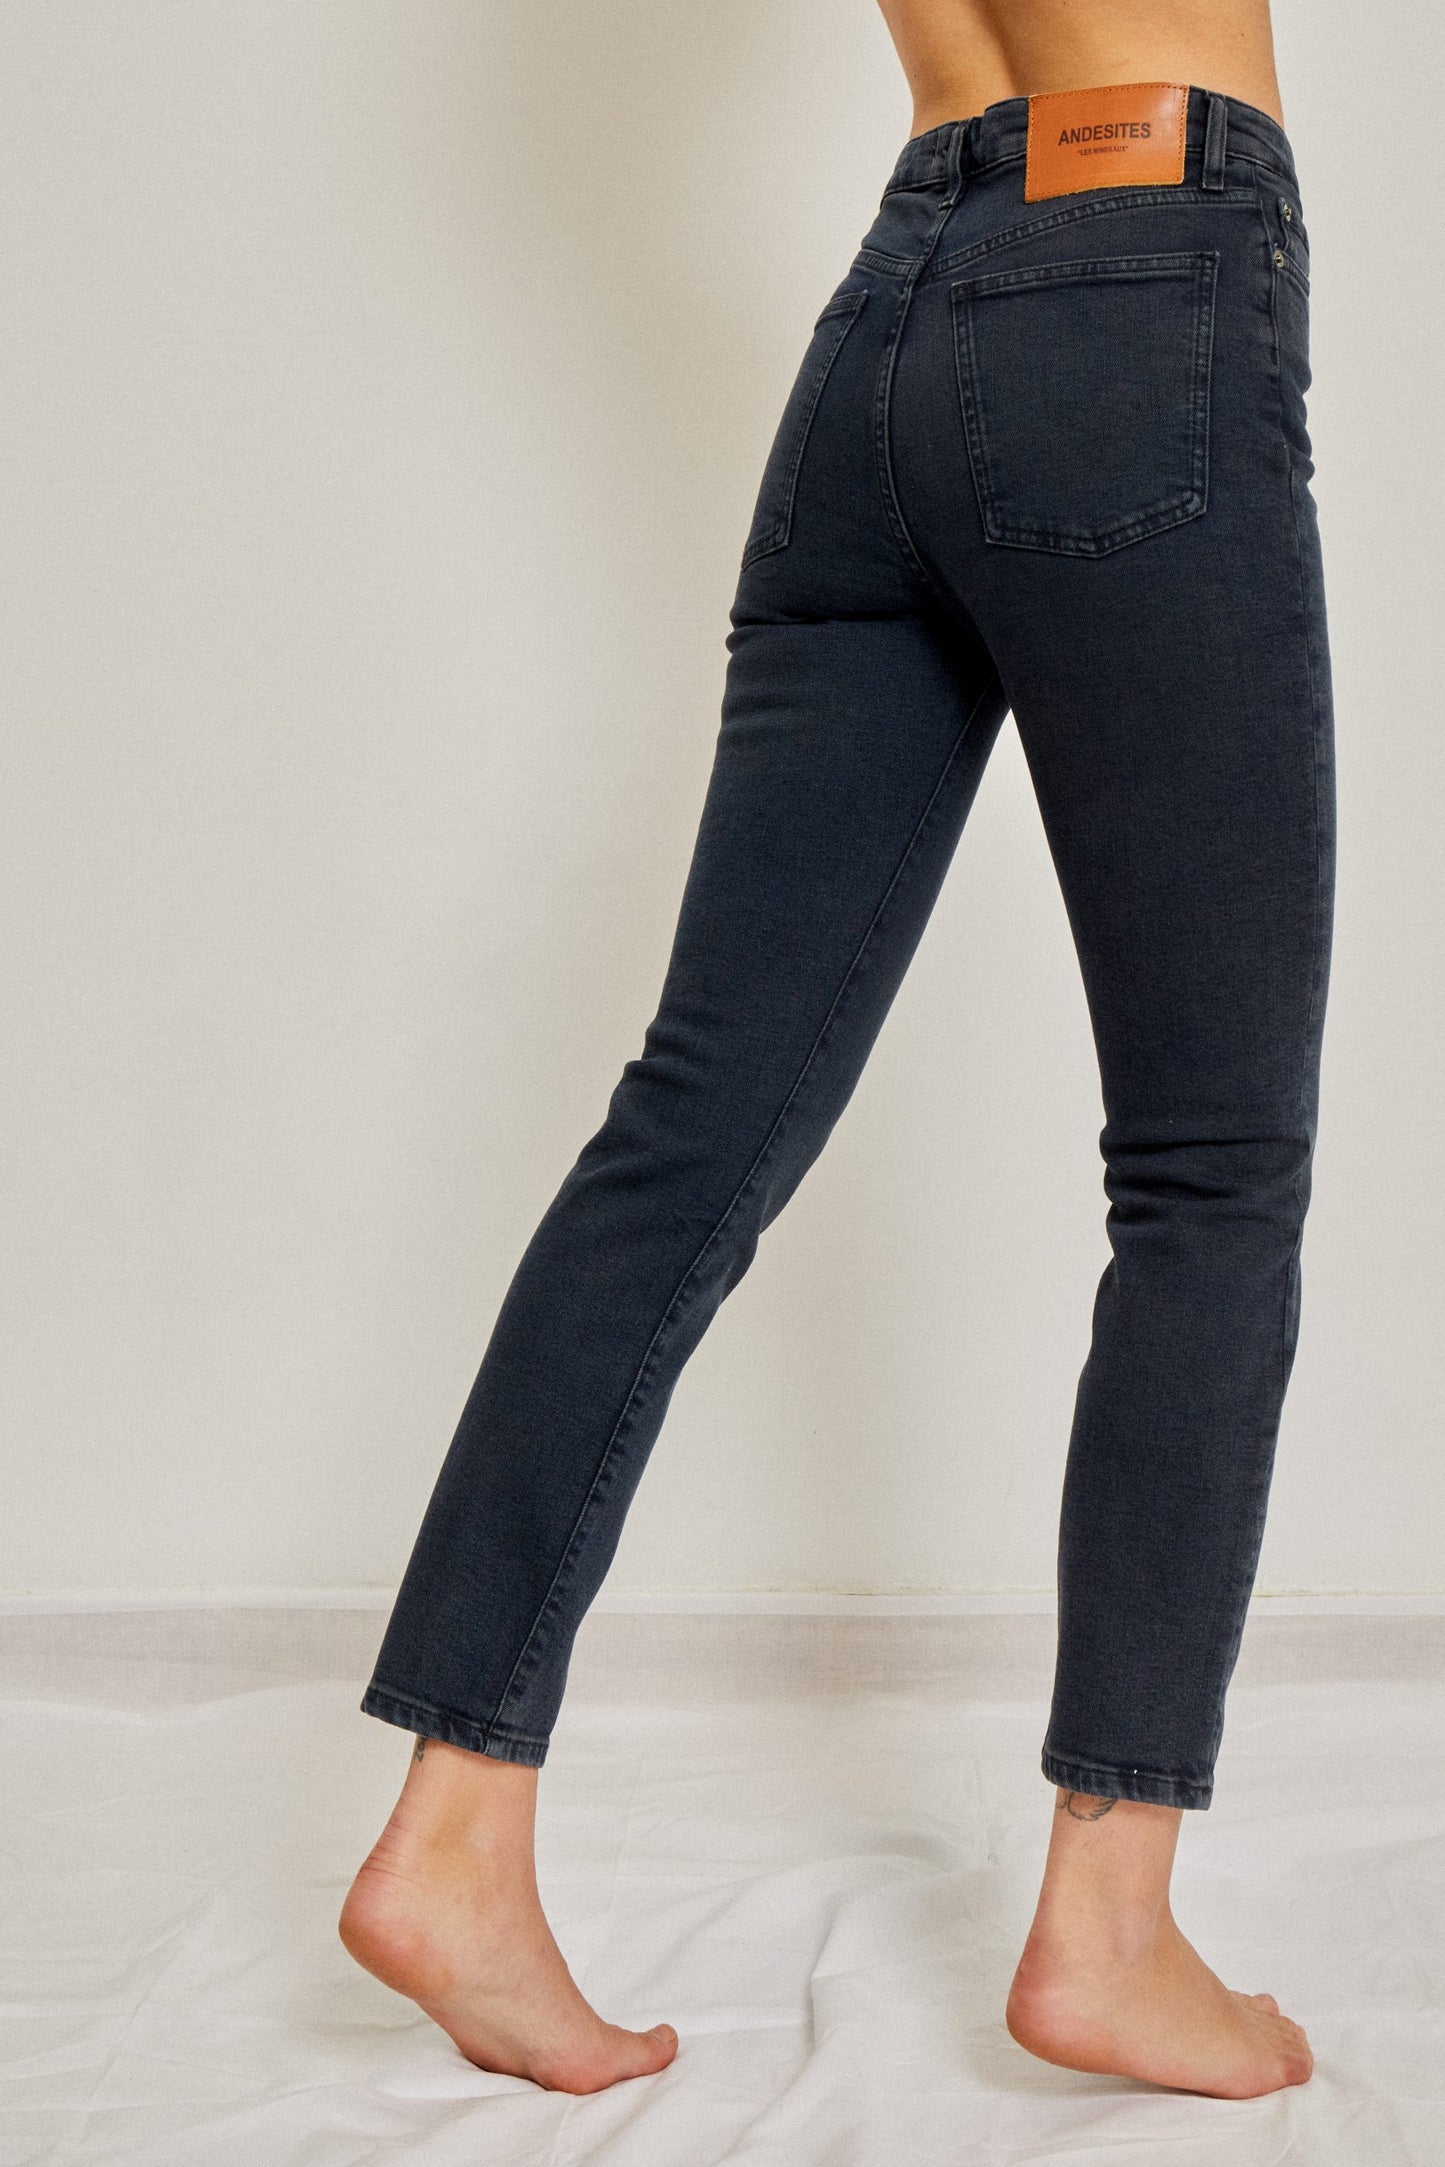 jeans elastico skinny